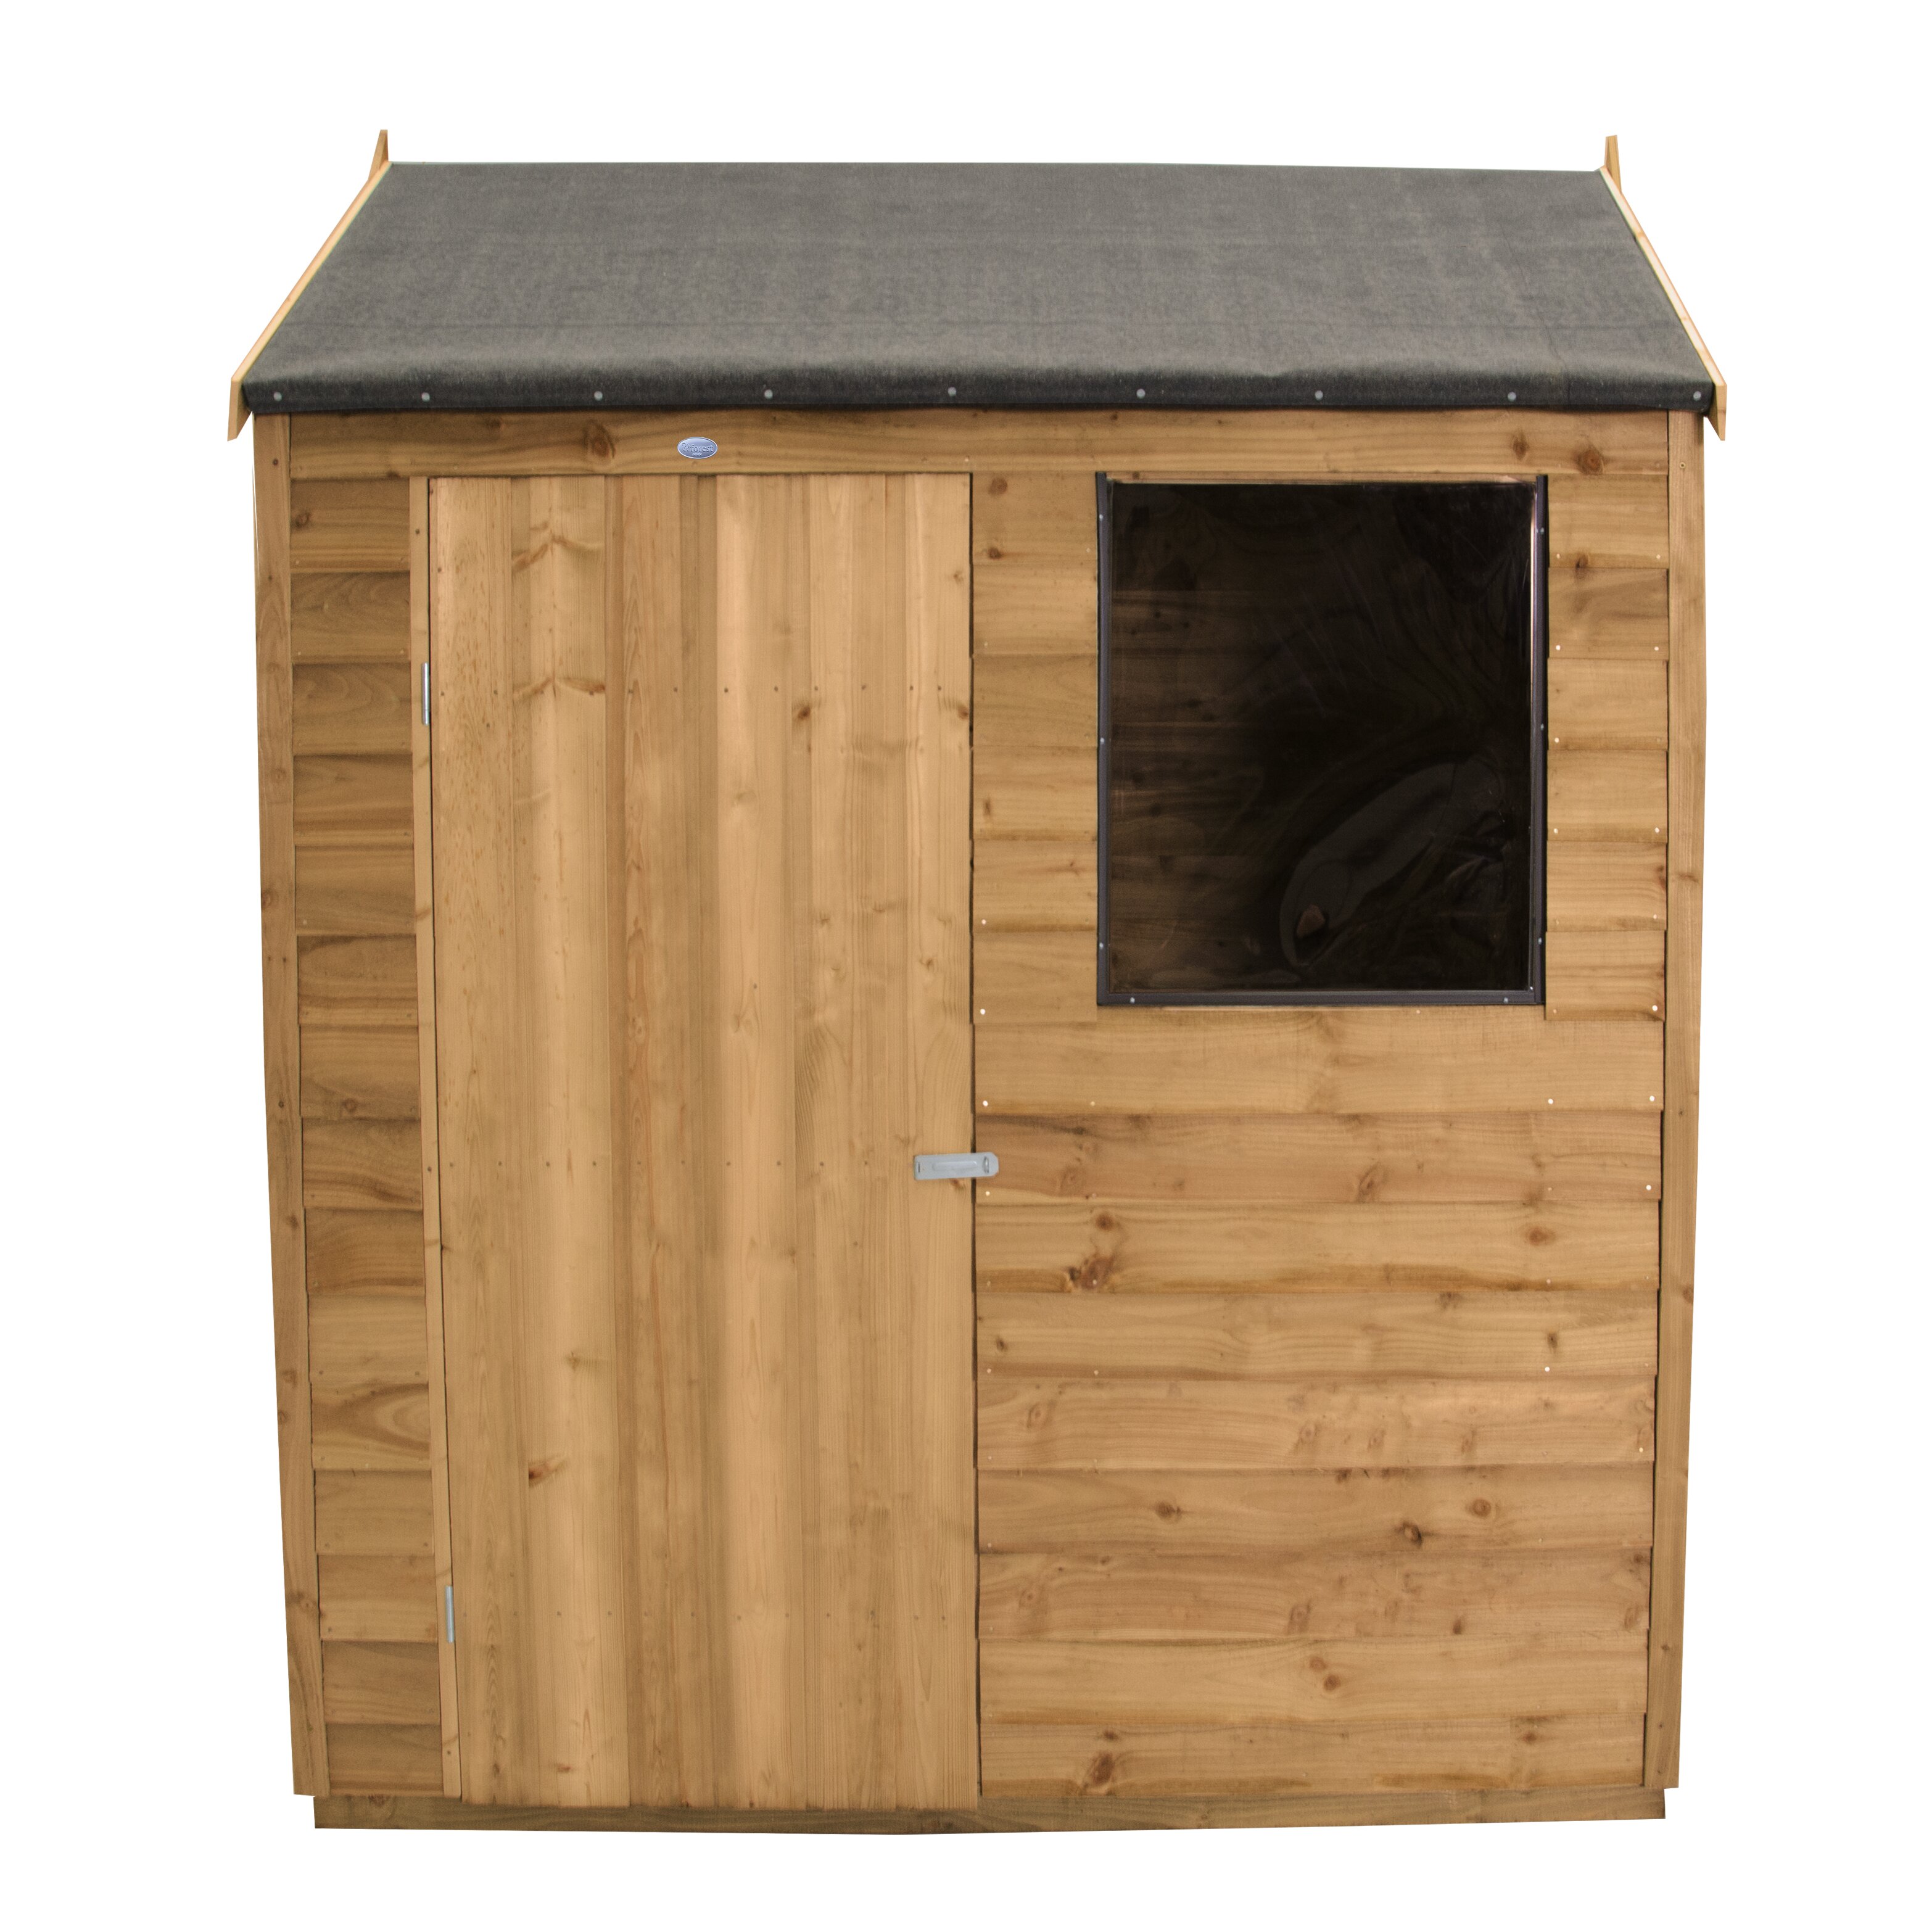 forest garden 6 x 4 wooden storage shed & reviews wayfair uk